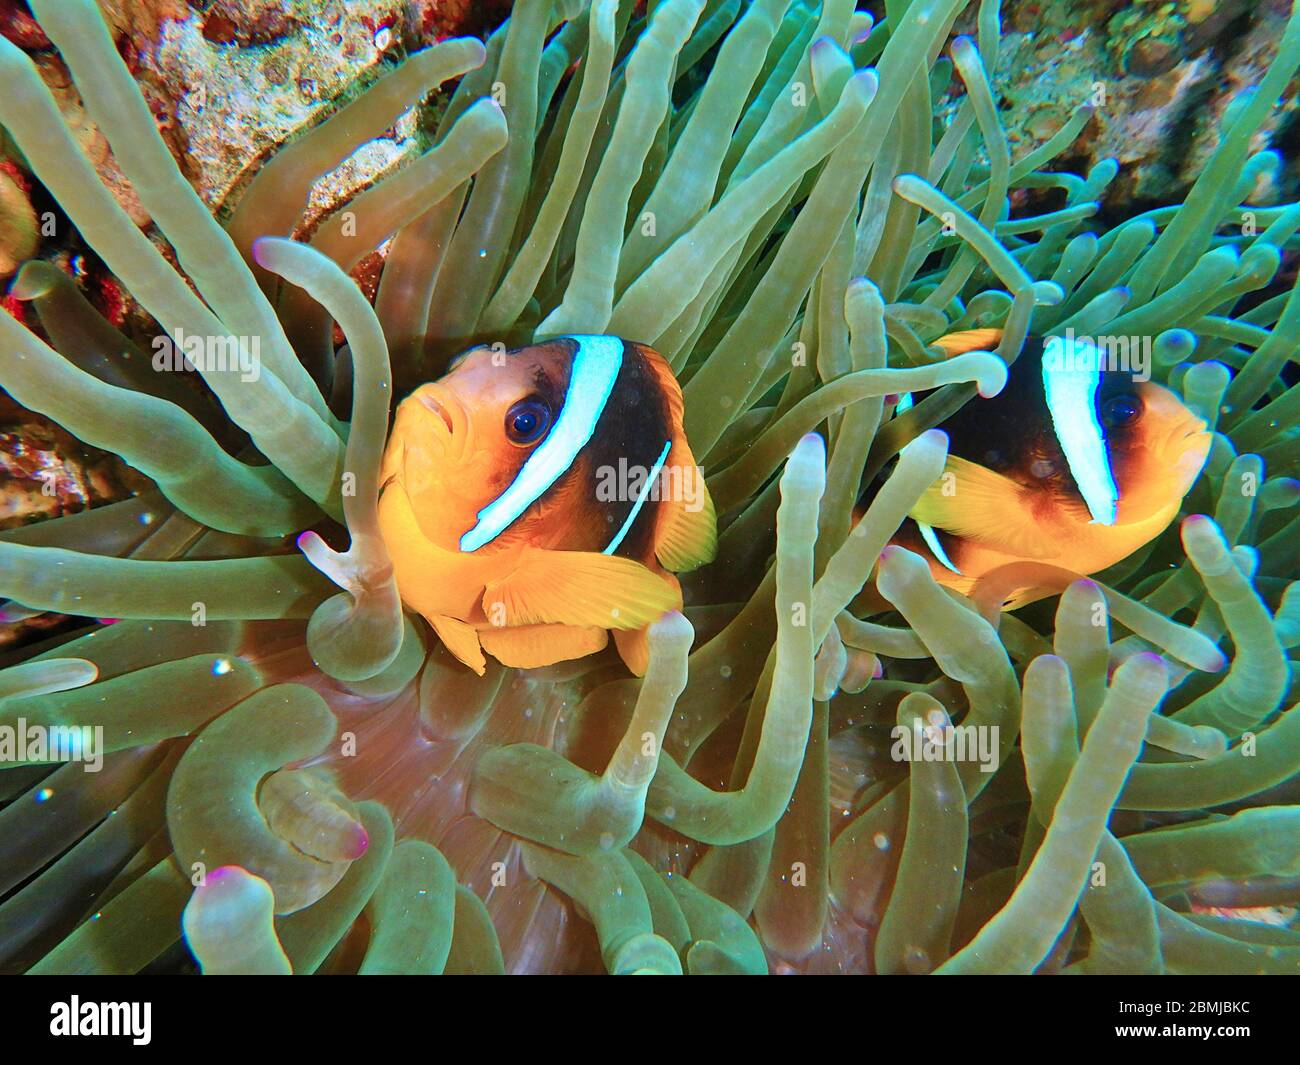 Nemo fish, sea anemone, anemone fish, Amphiprioninae, Clownfish Stock Photo